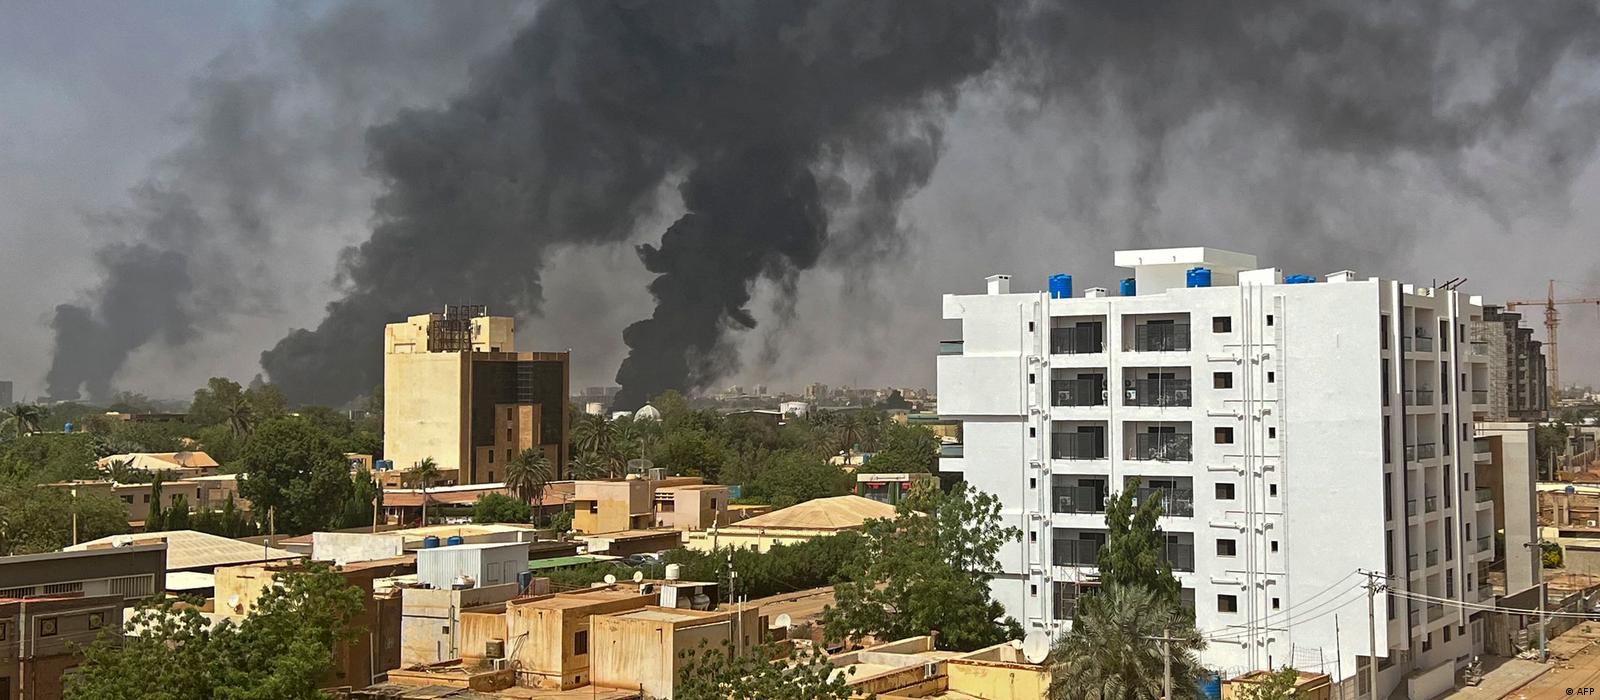 Sudan fighting continues